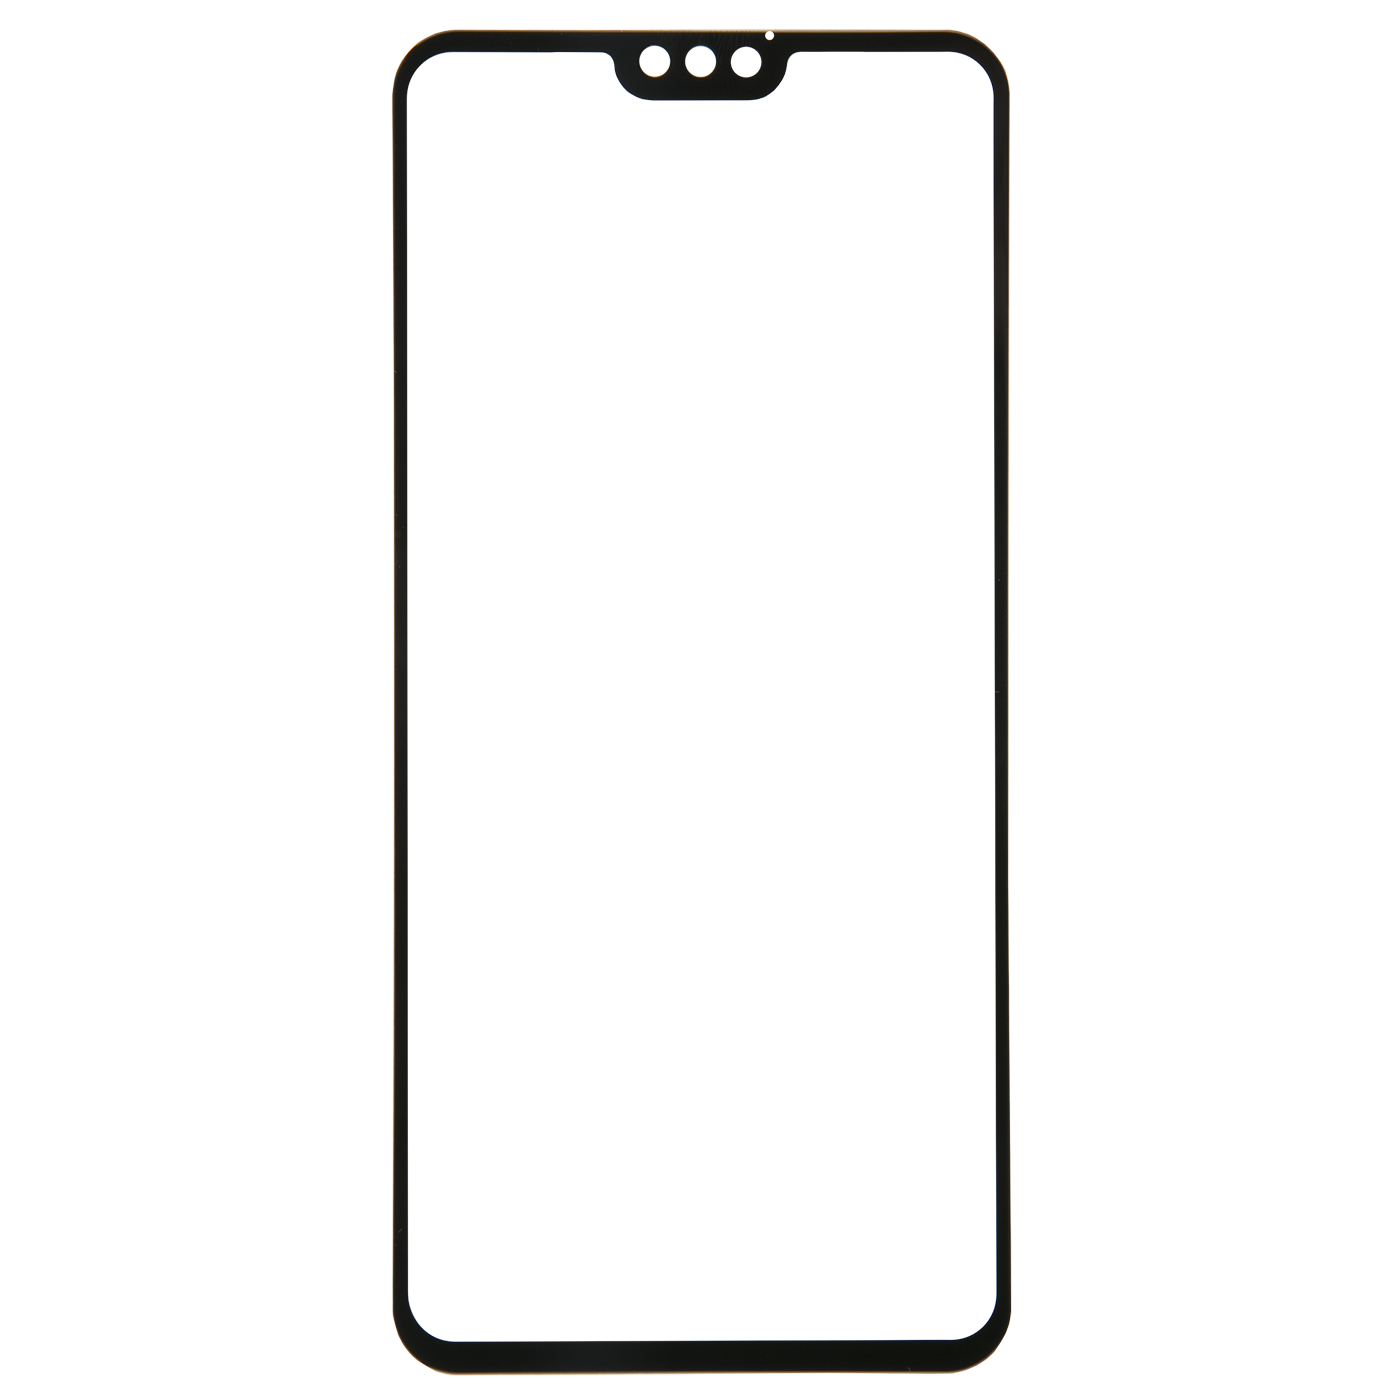 Защитный экран Huawei Honor 8X Full Screen tempered glass